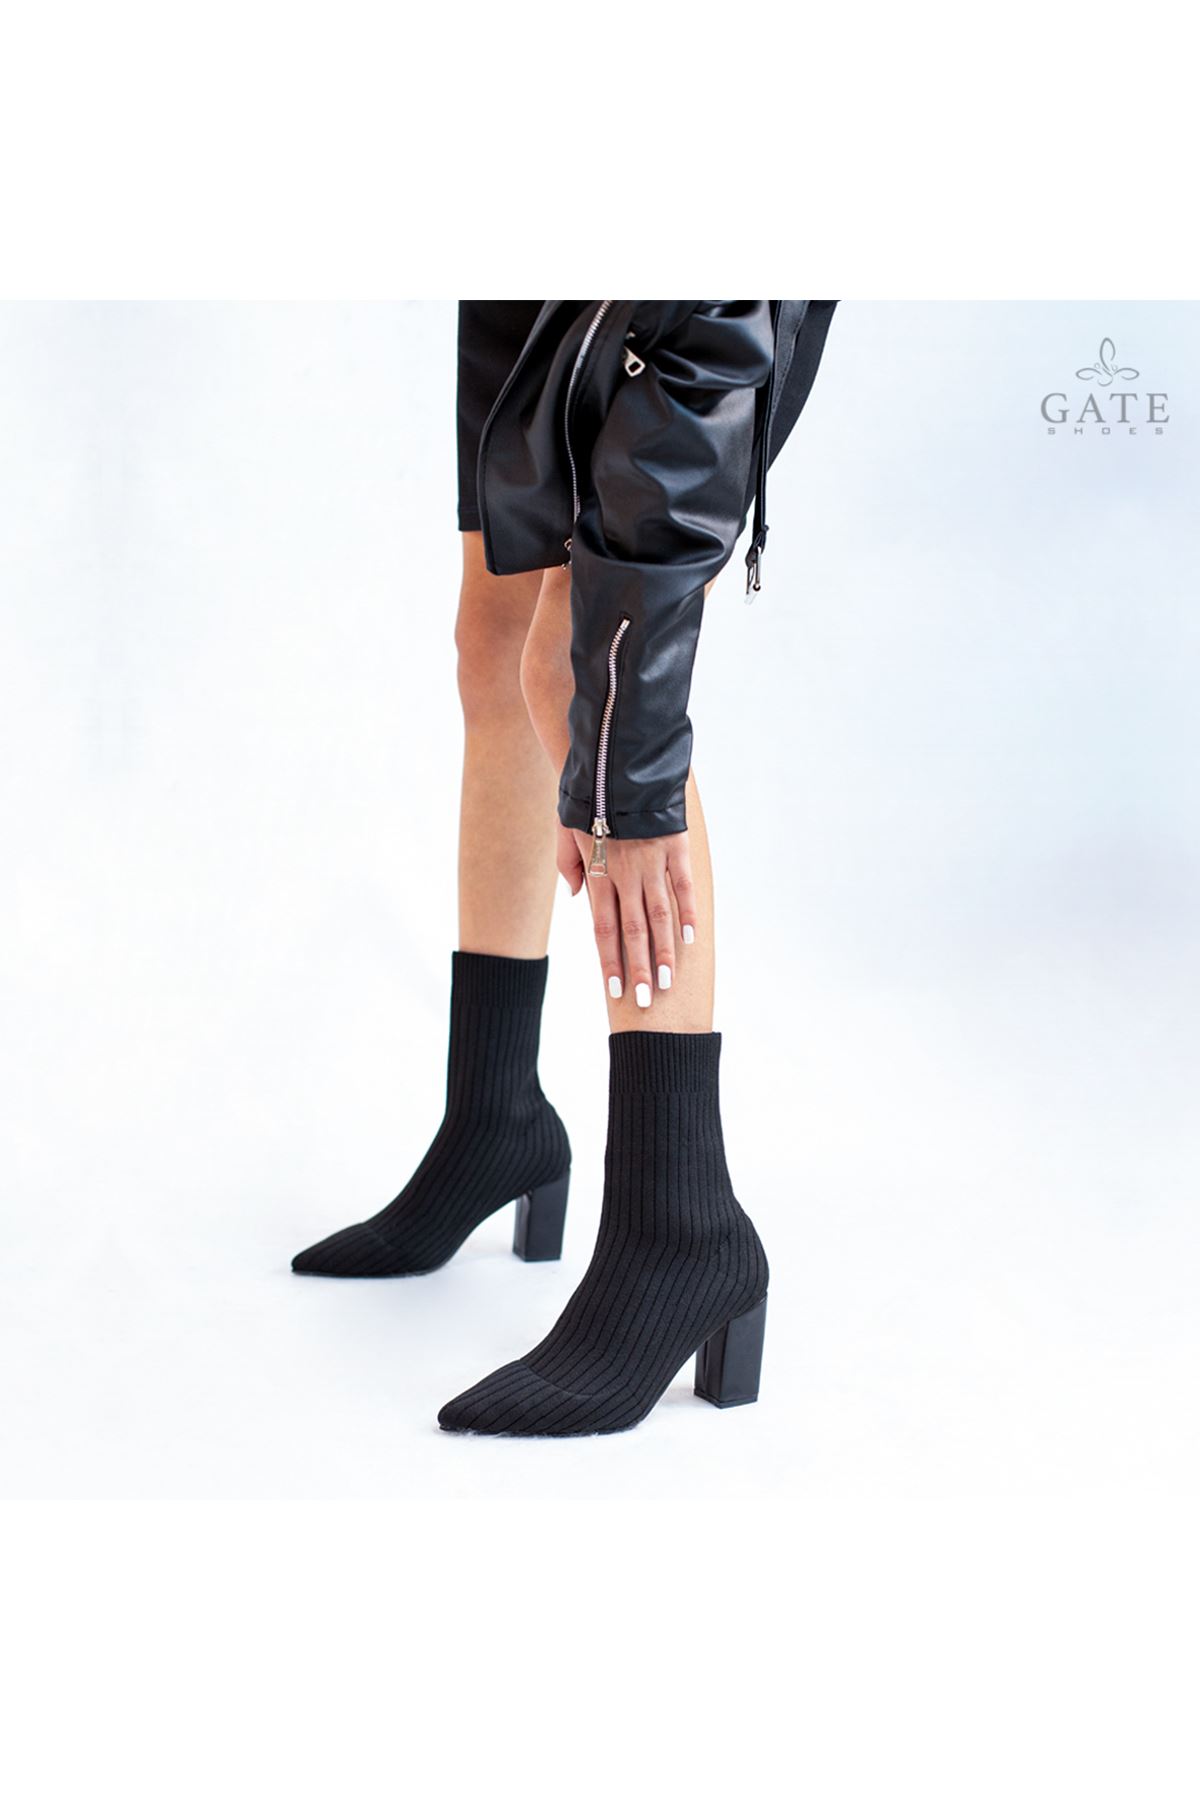 Gate29 Alexa Kadın Triko Topuklu Bot & Bootie -Siyah